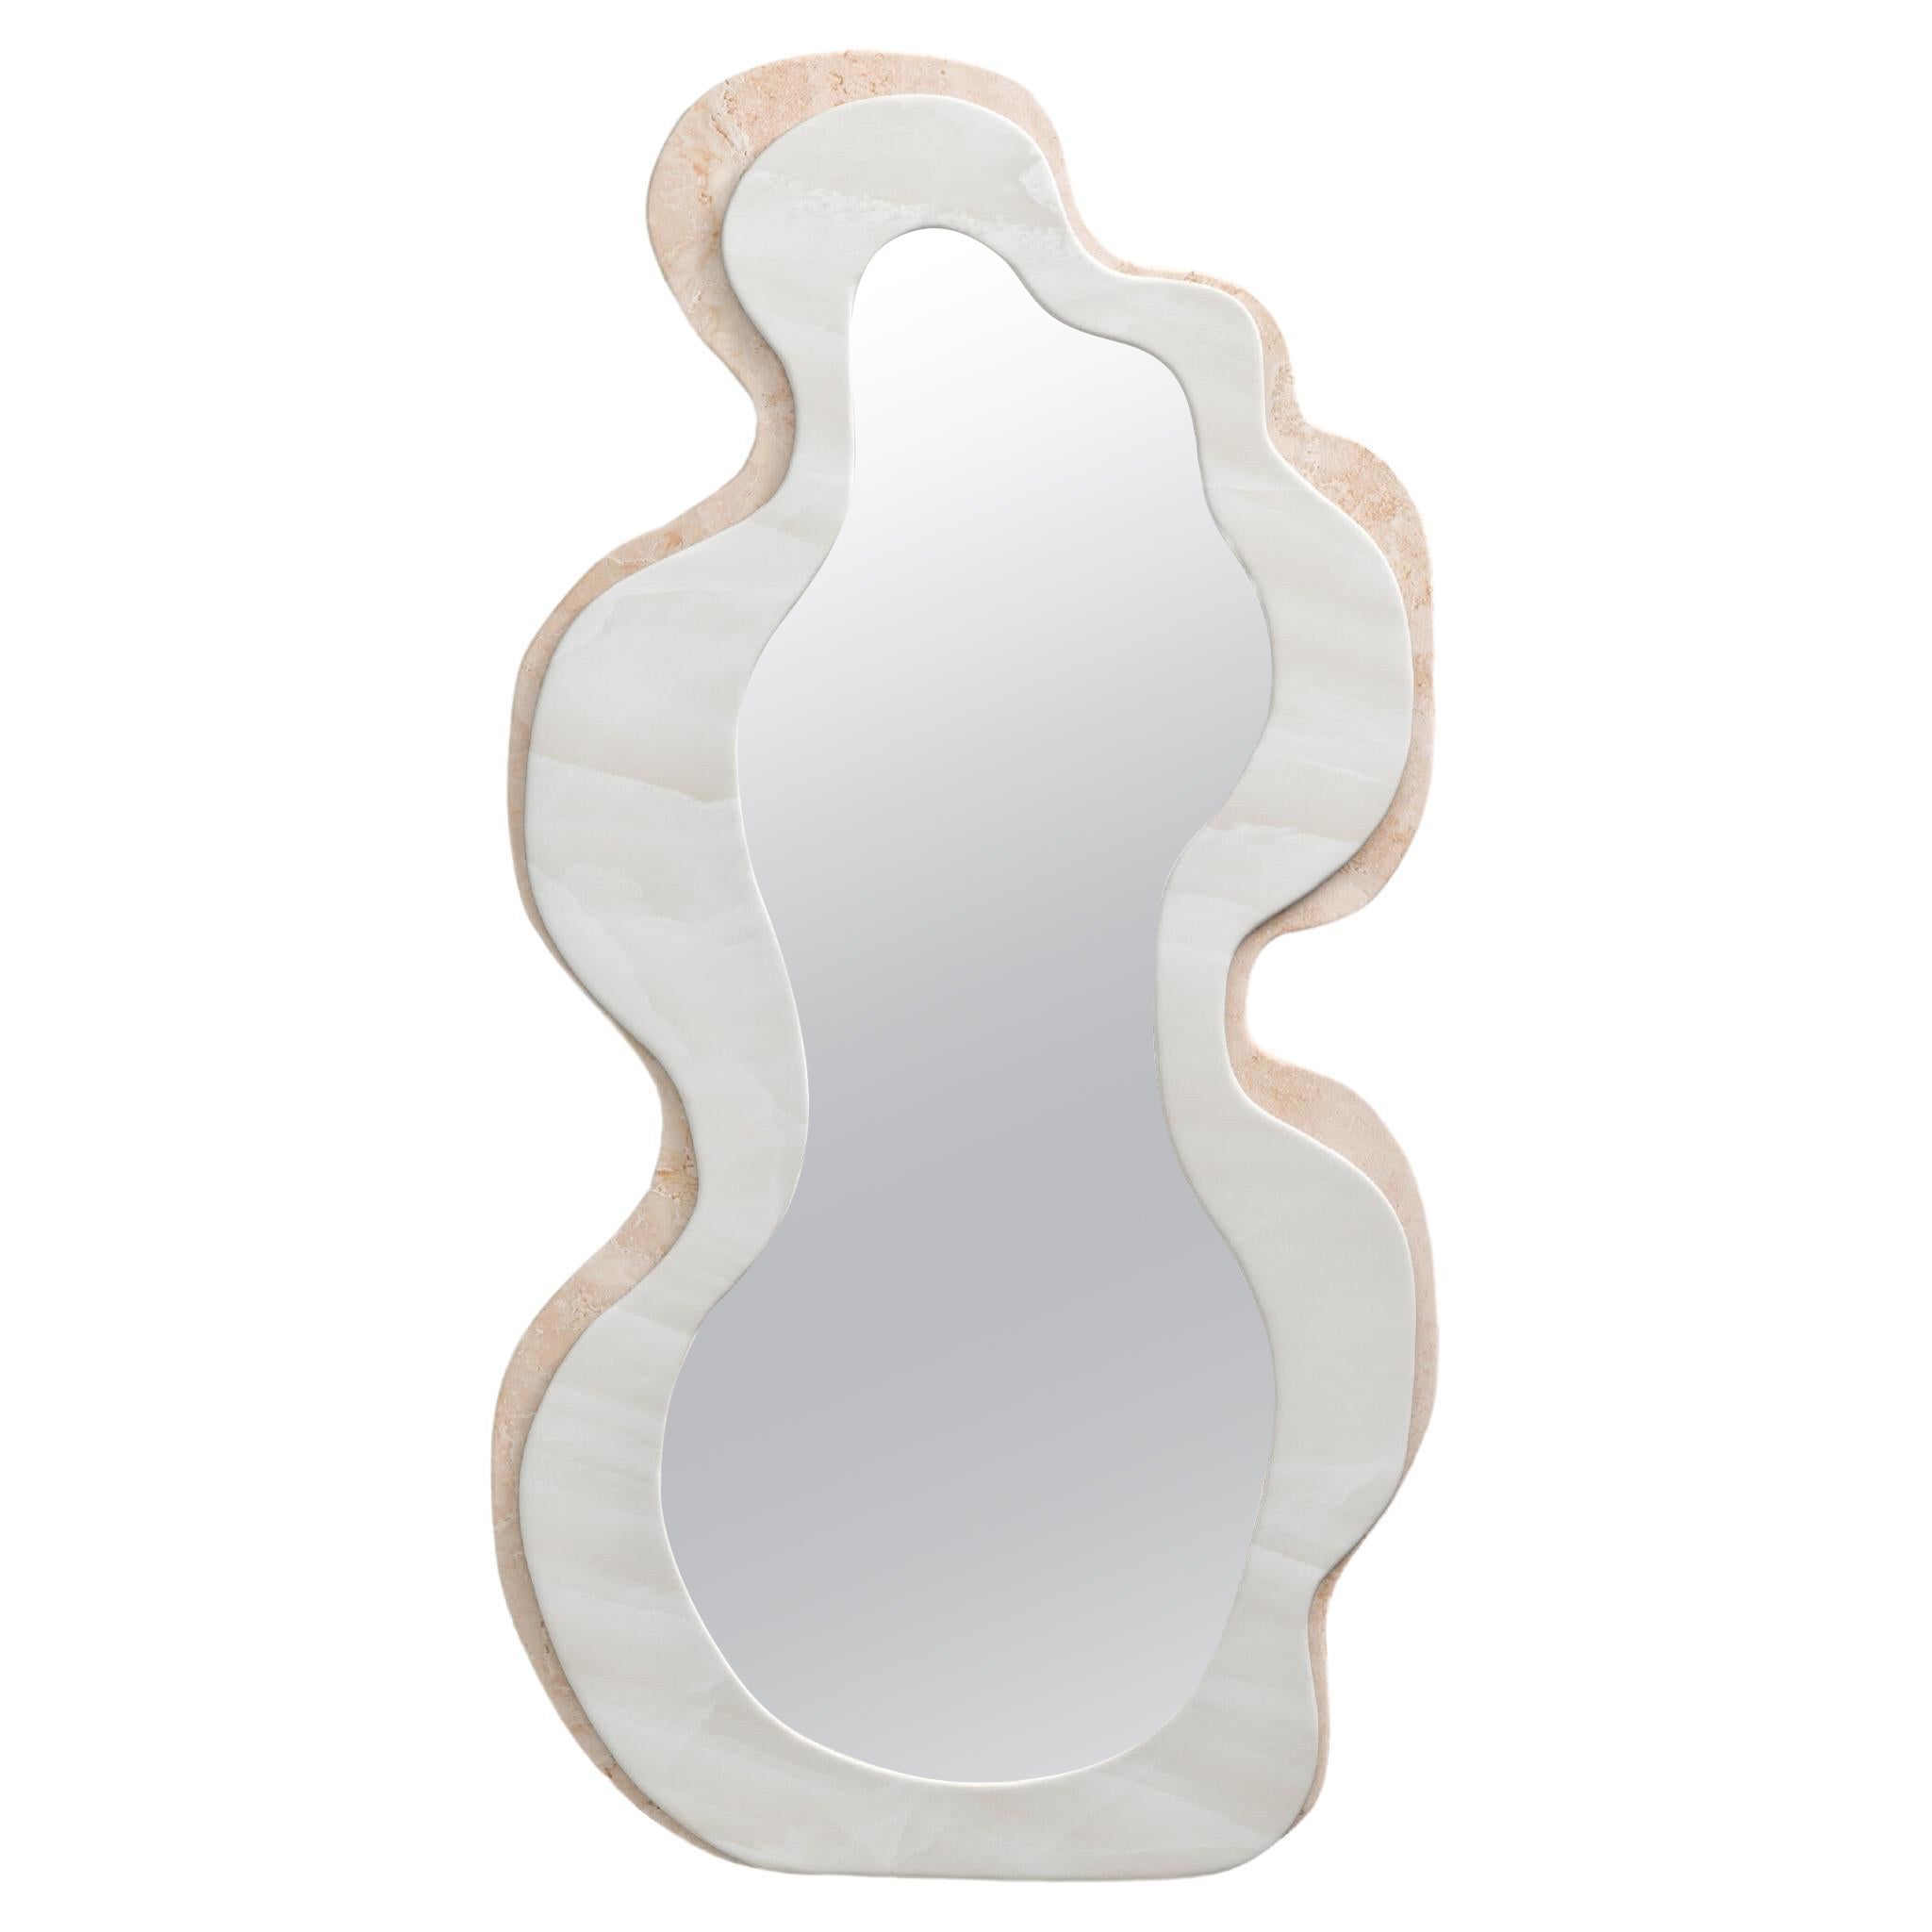 FORM(LA) Onda Floor Mirror 78”H x 42”W x 1.5”D Bianco Onyx & Travertino Navona  For Sale